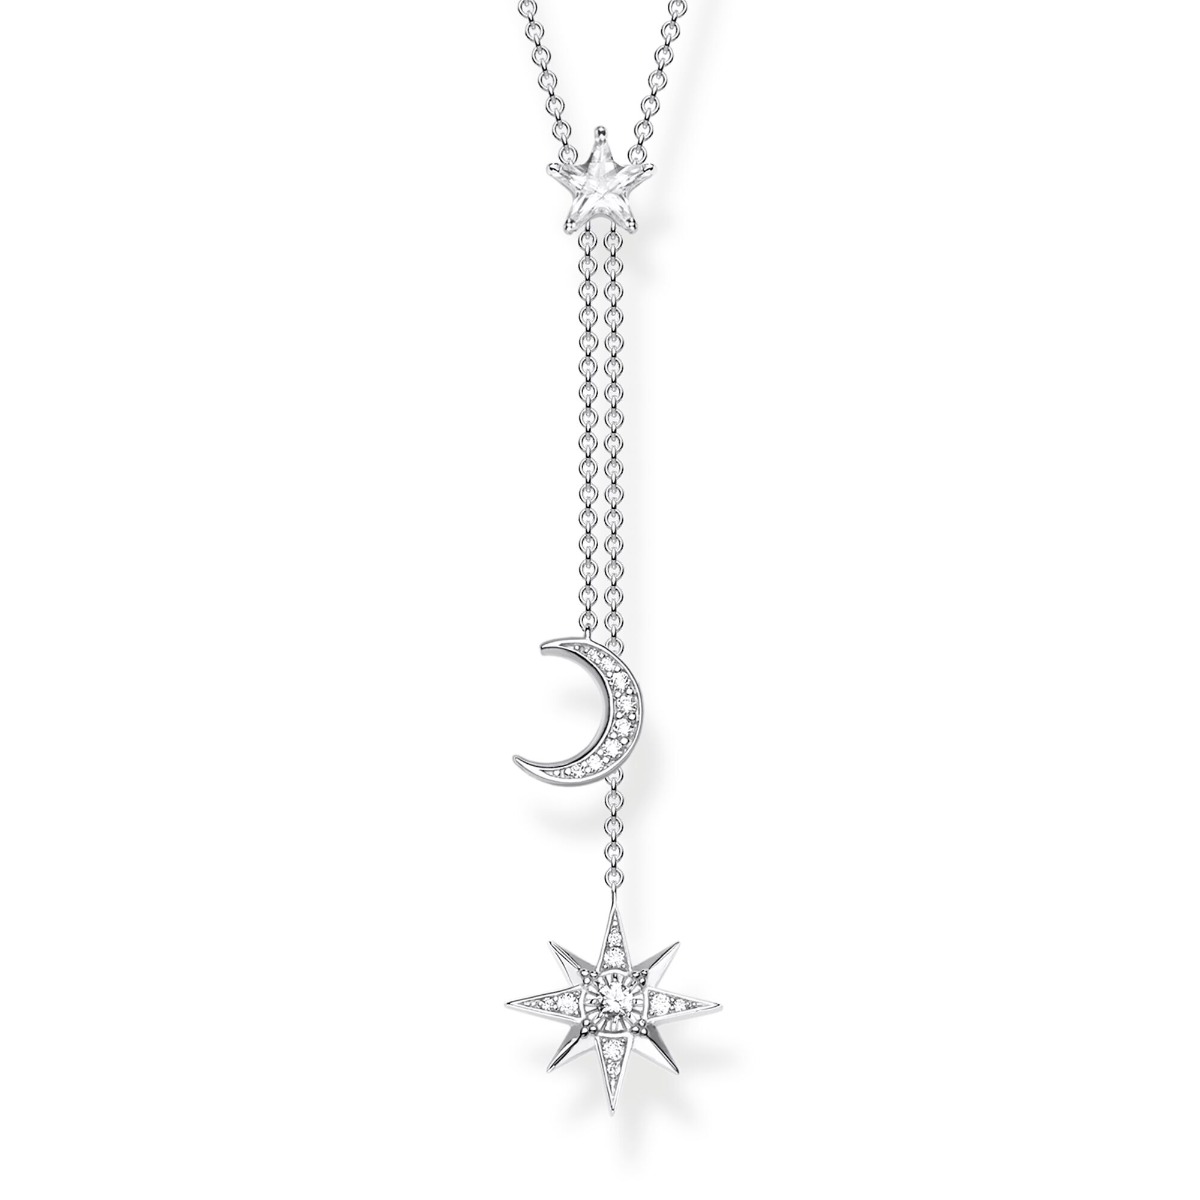 Photos - Pendant / Choker Necklace Thomas Sabo Star and Moon Y Necklace - Silver and Zirconia 